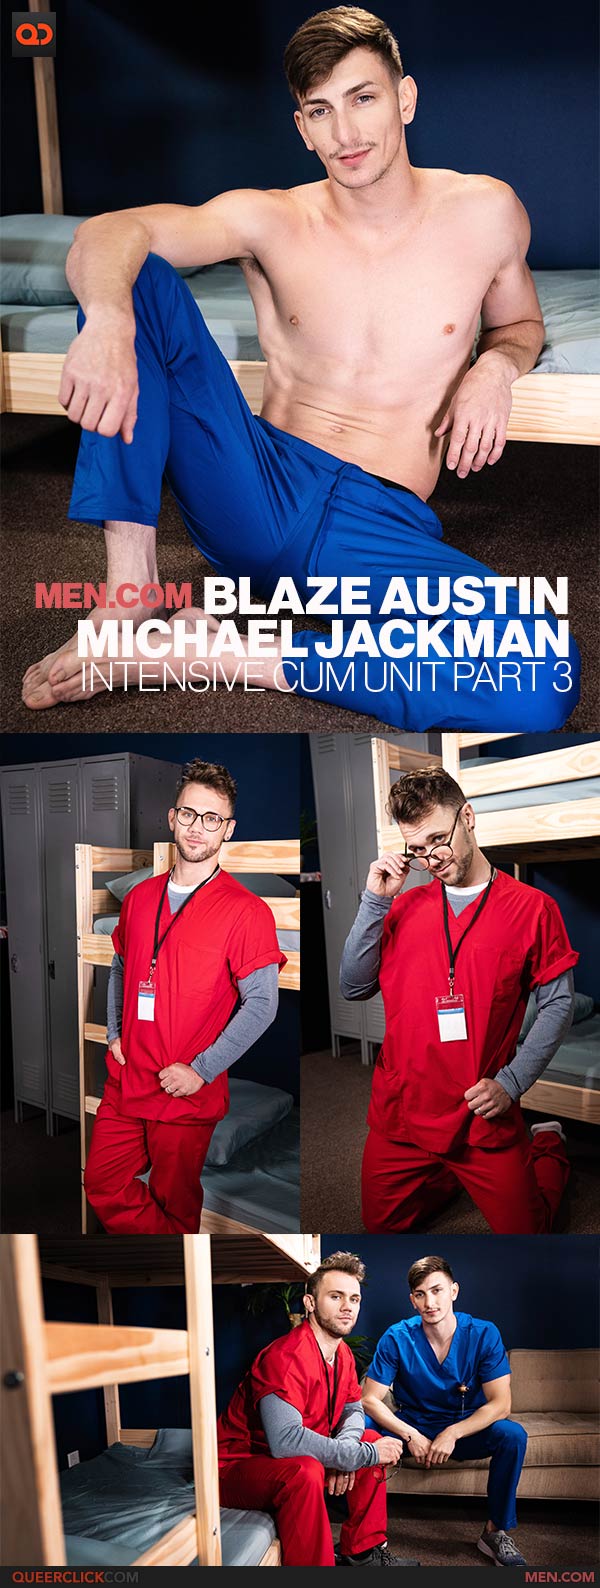 Men.com: Michael Jackman and Blaze Austin